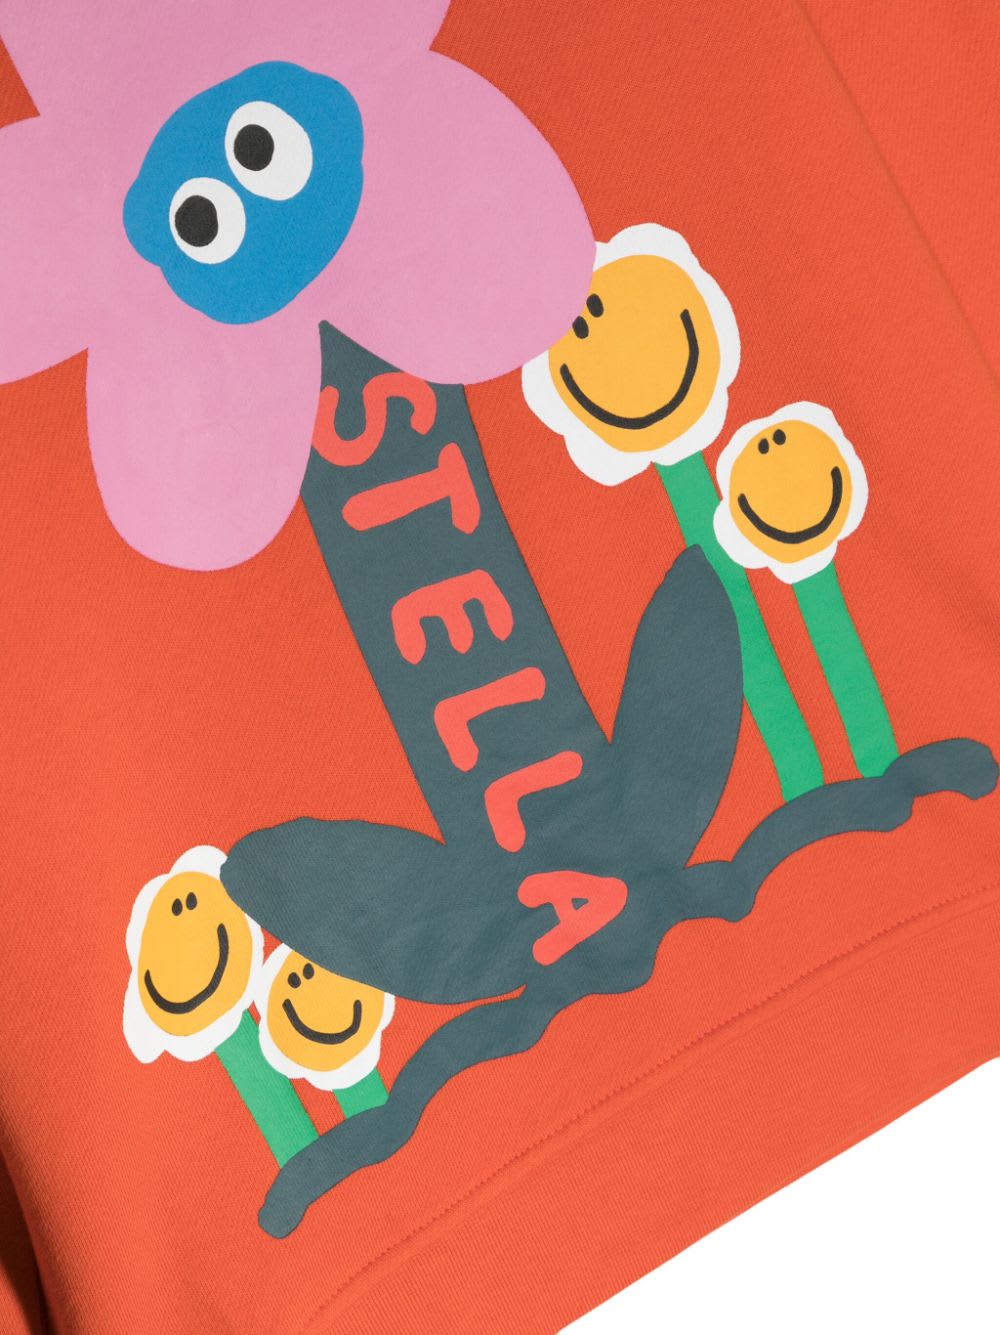 Shop Stella Mccartney Sweatshirt In Orange